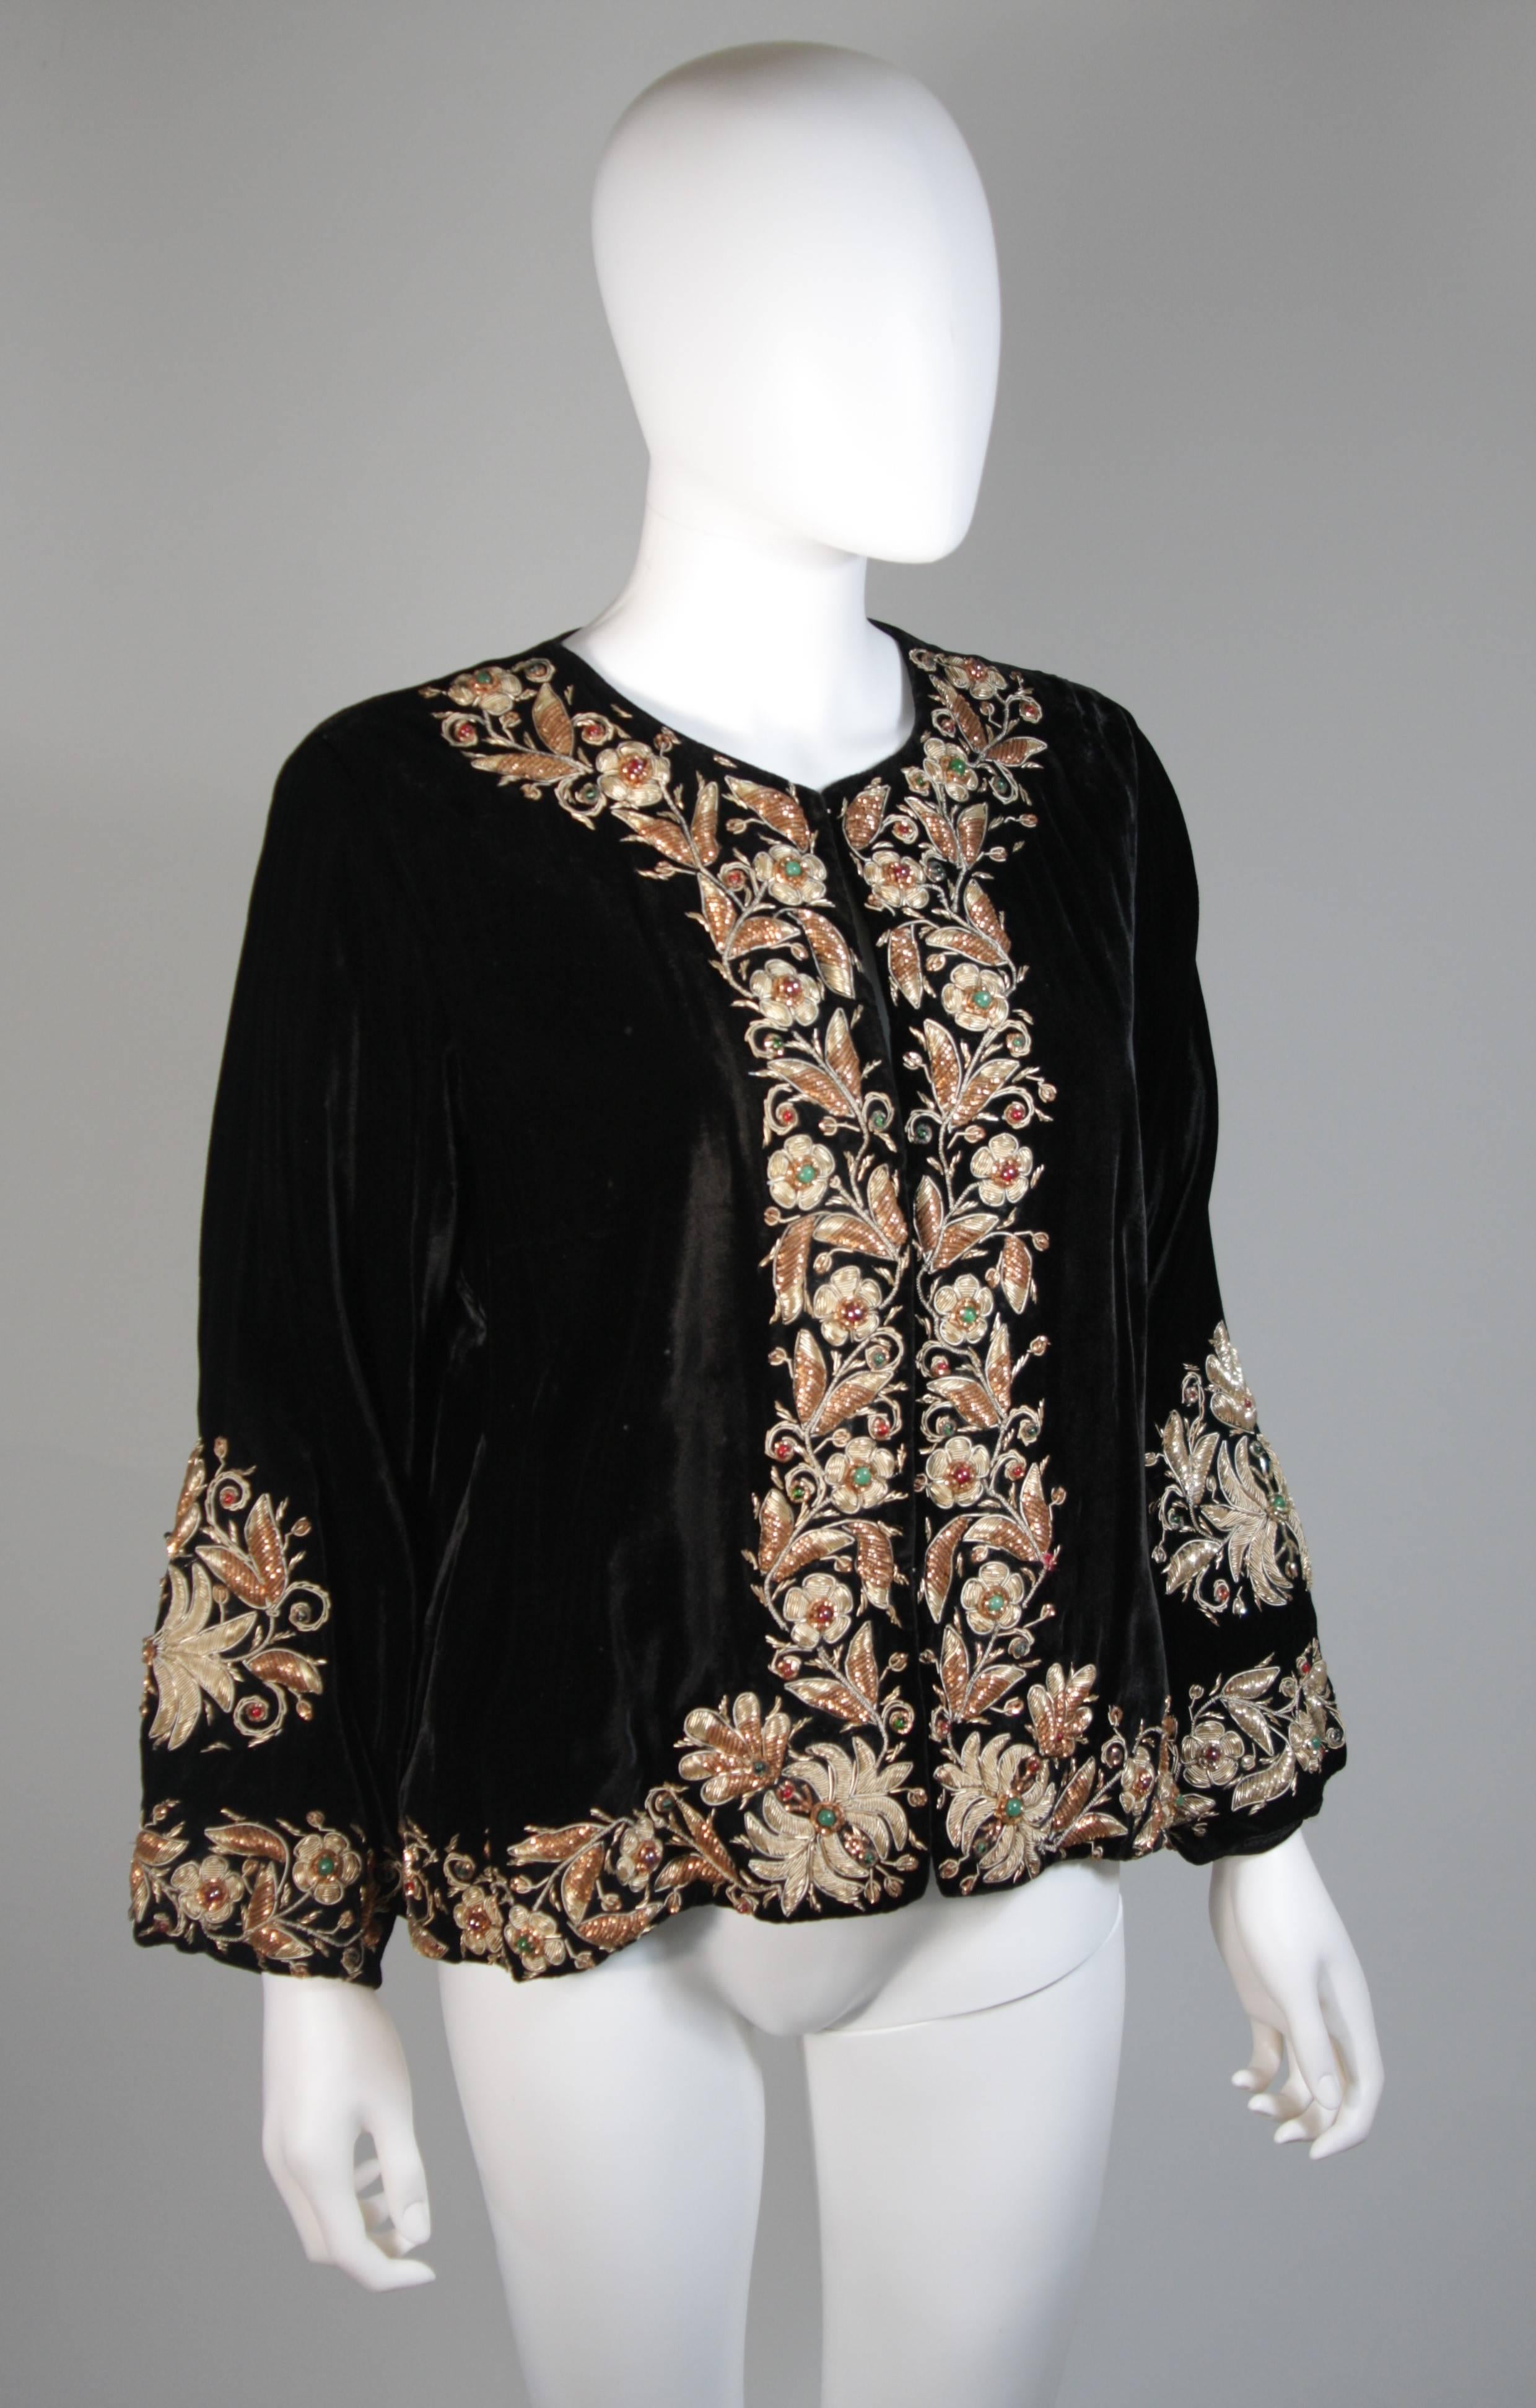 Black Velvet Jacket with Metallic Embroidery and Embellishment Size Small Medium Large